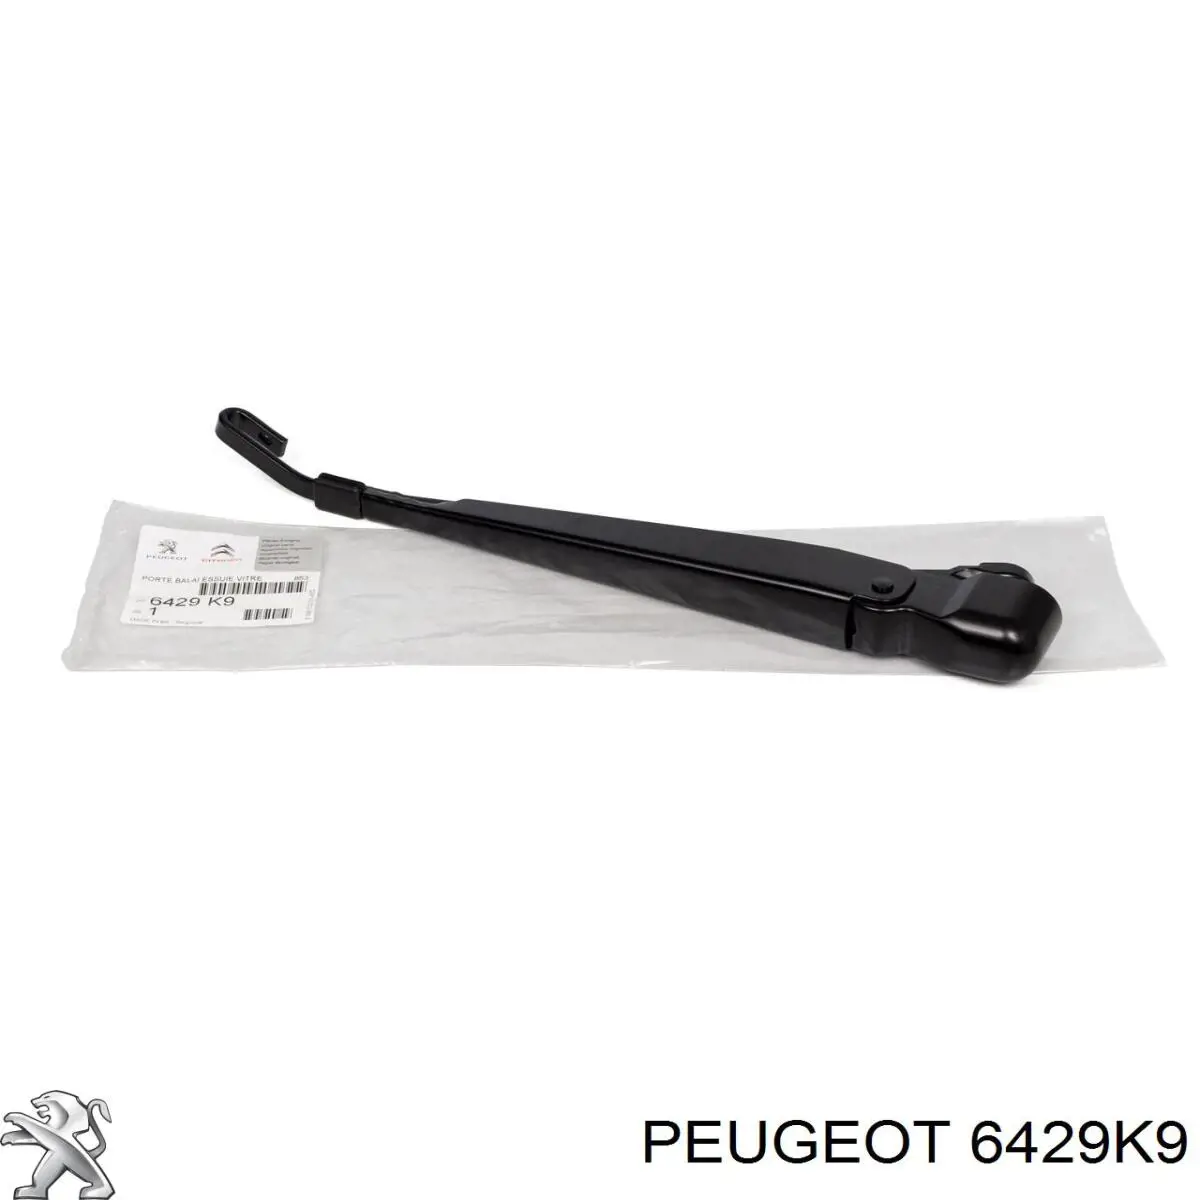 6429K9 Peugeot/Citroen braço de limpa-pára-brisas de vidro traseiro